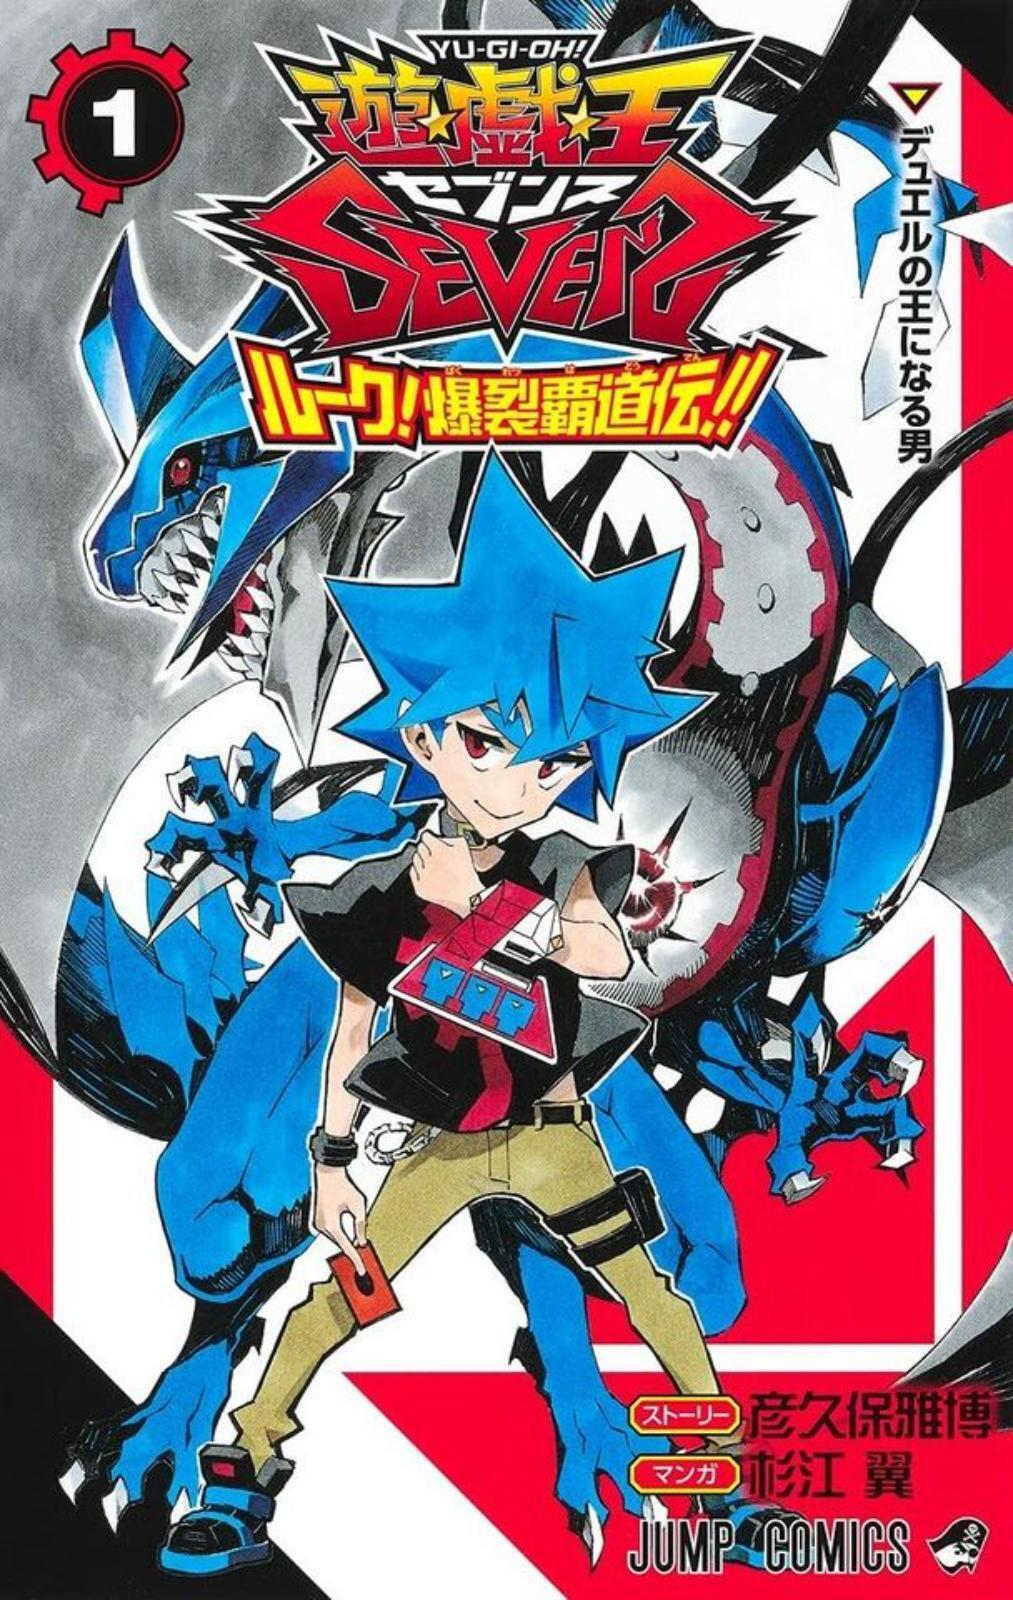 Yu Gi Oh SEVENS  Vol.1-3 Comic Manga Anime Shonen Jump Luke Japanese